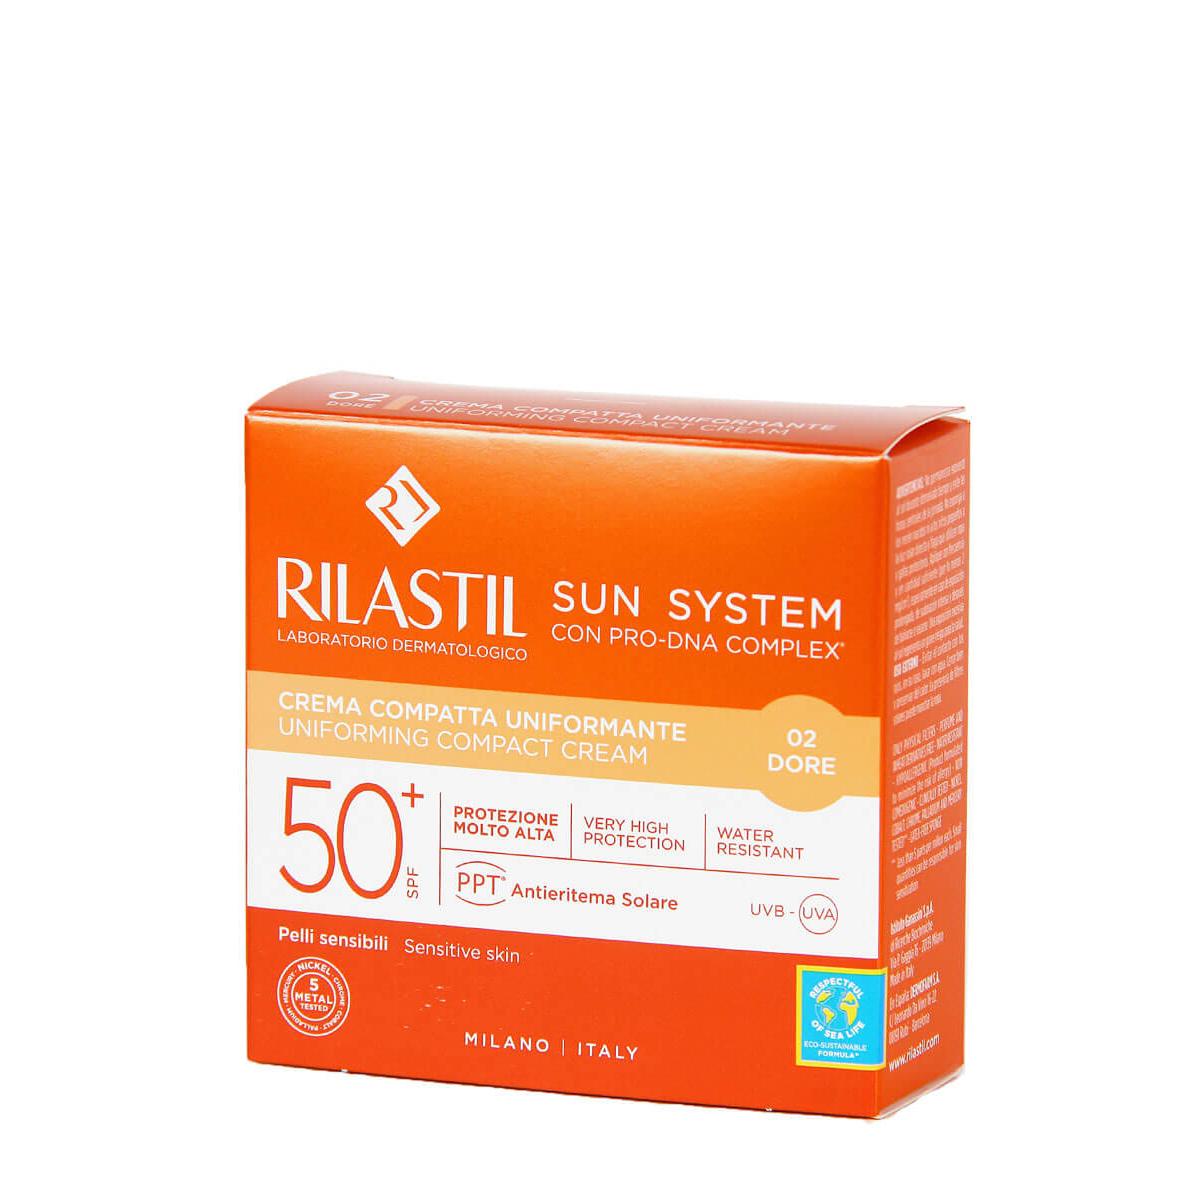 Cumlaude Lab - Rilastil sun system compacto color dore spf50+ 10 gr